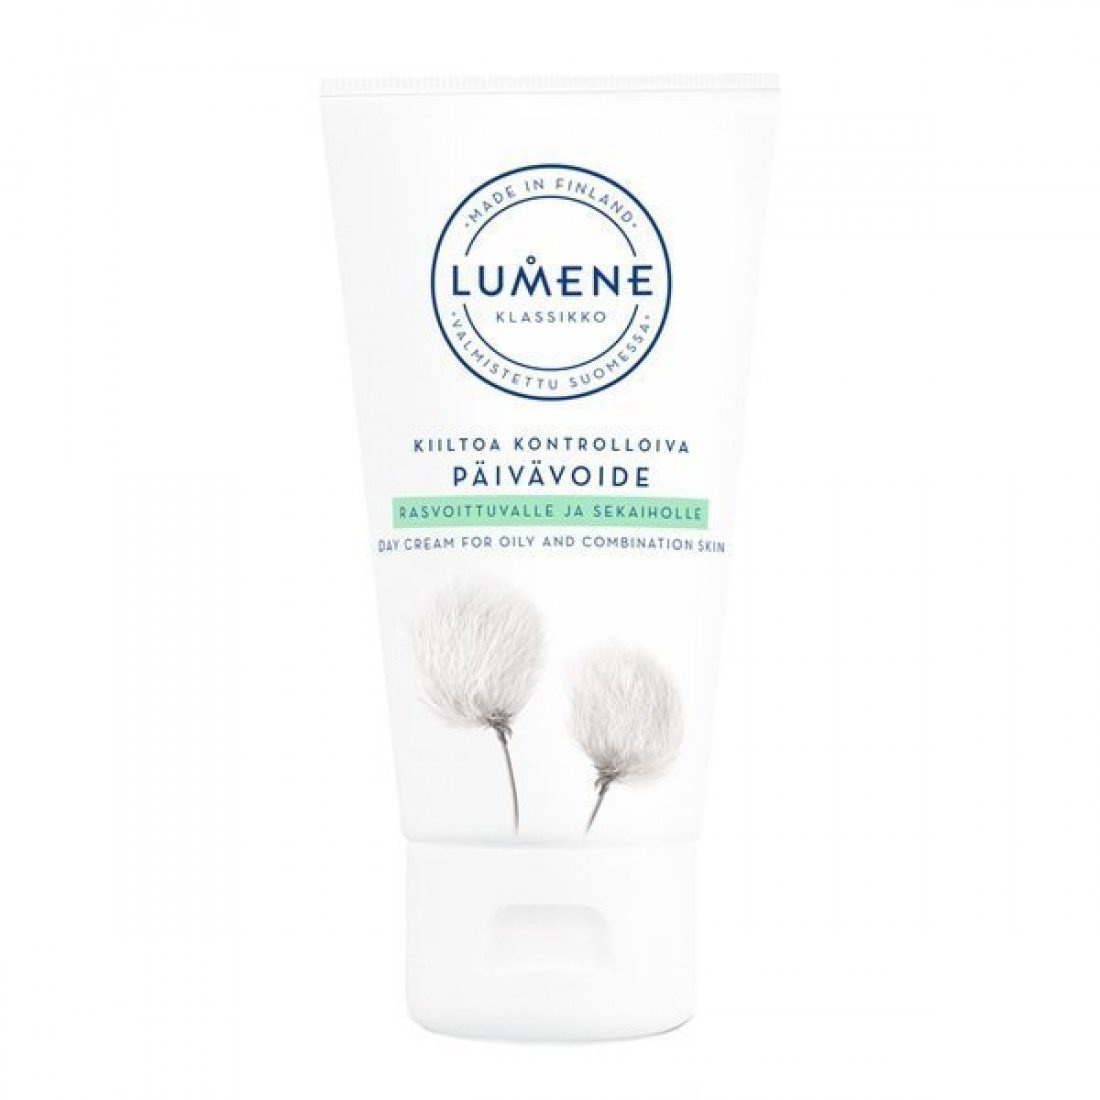 Lumene Klassikko Day Cream For Oily & Combination Skin